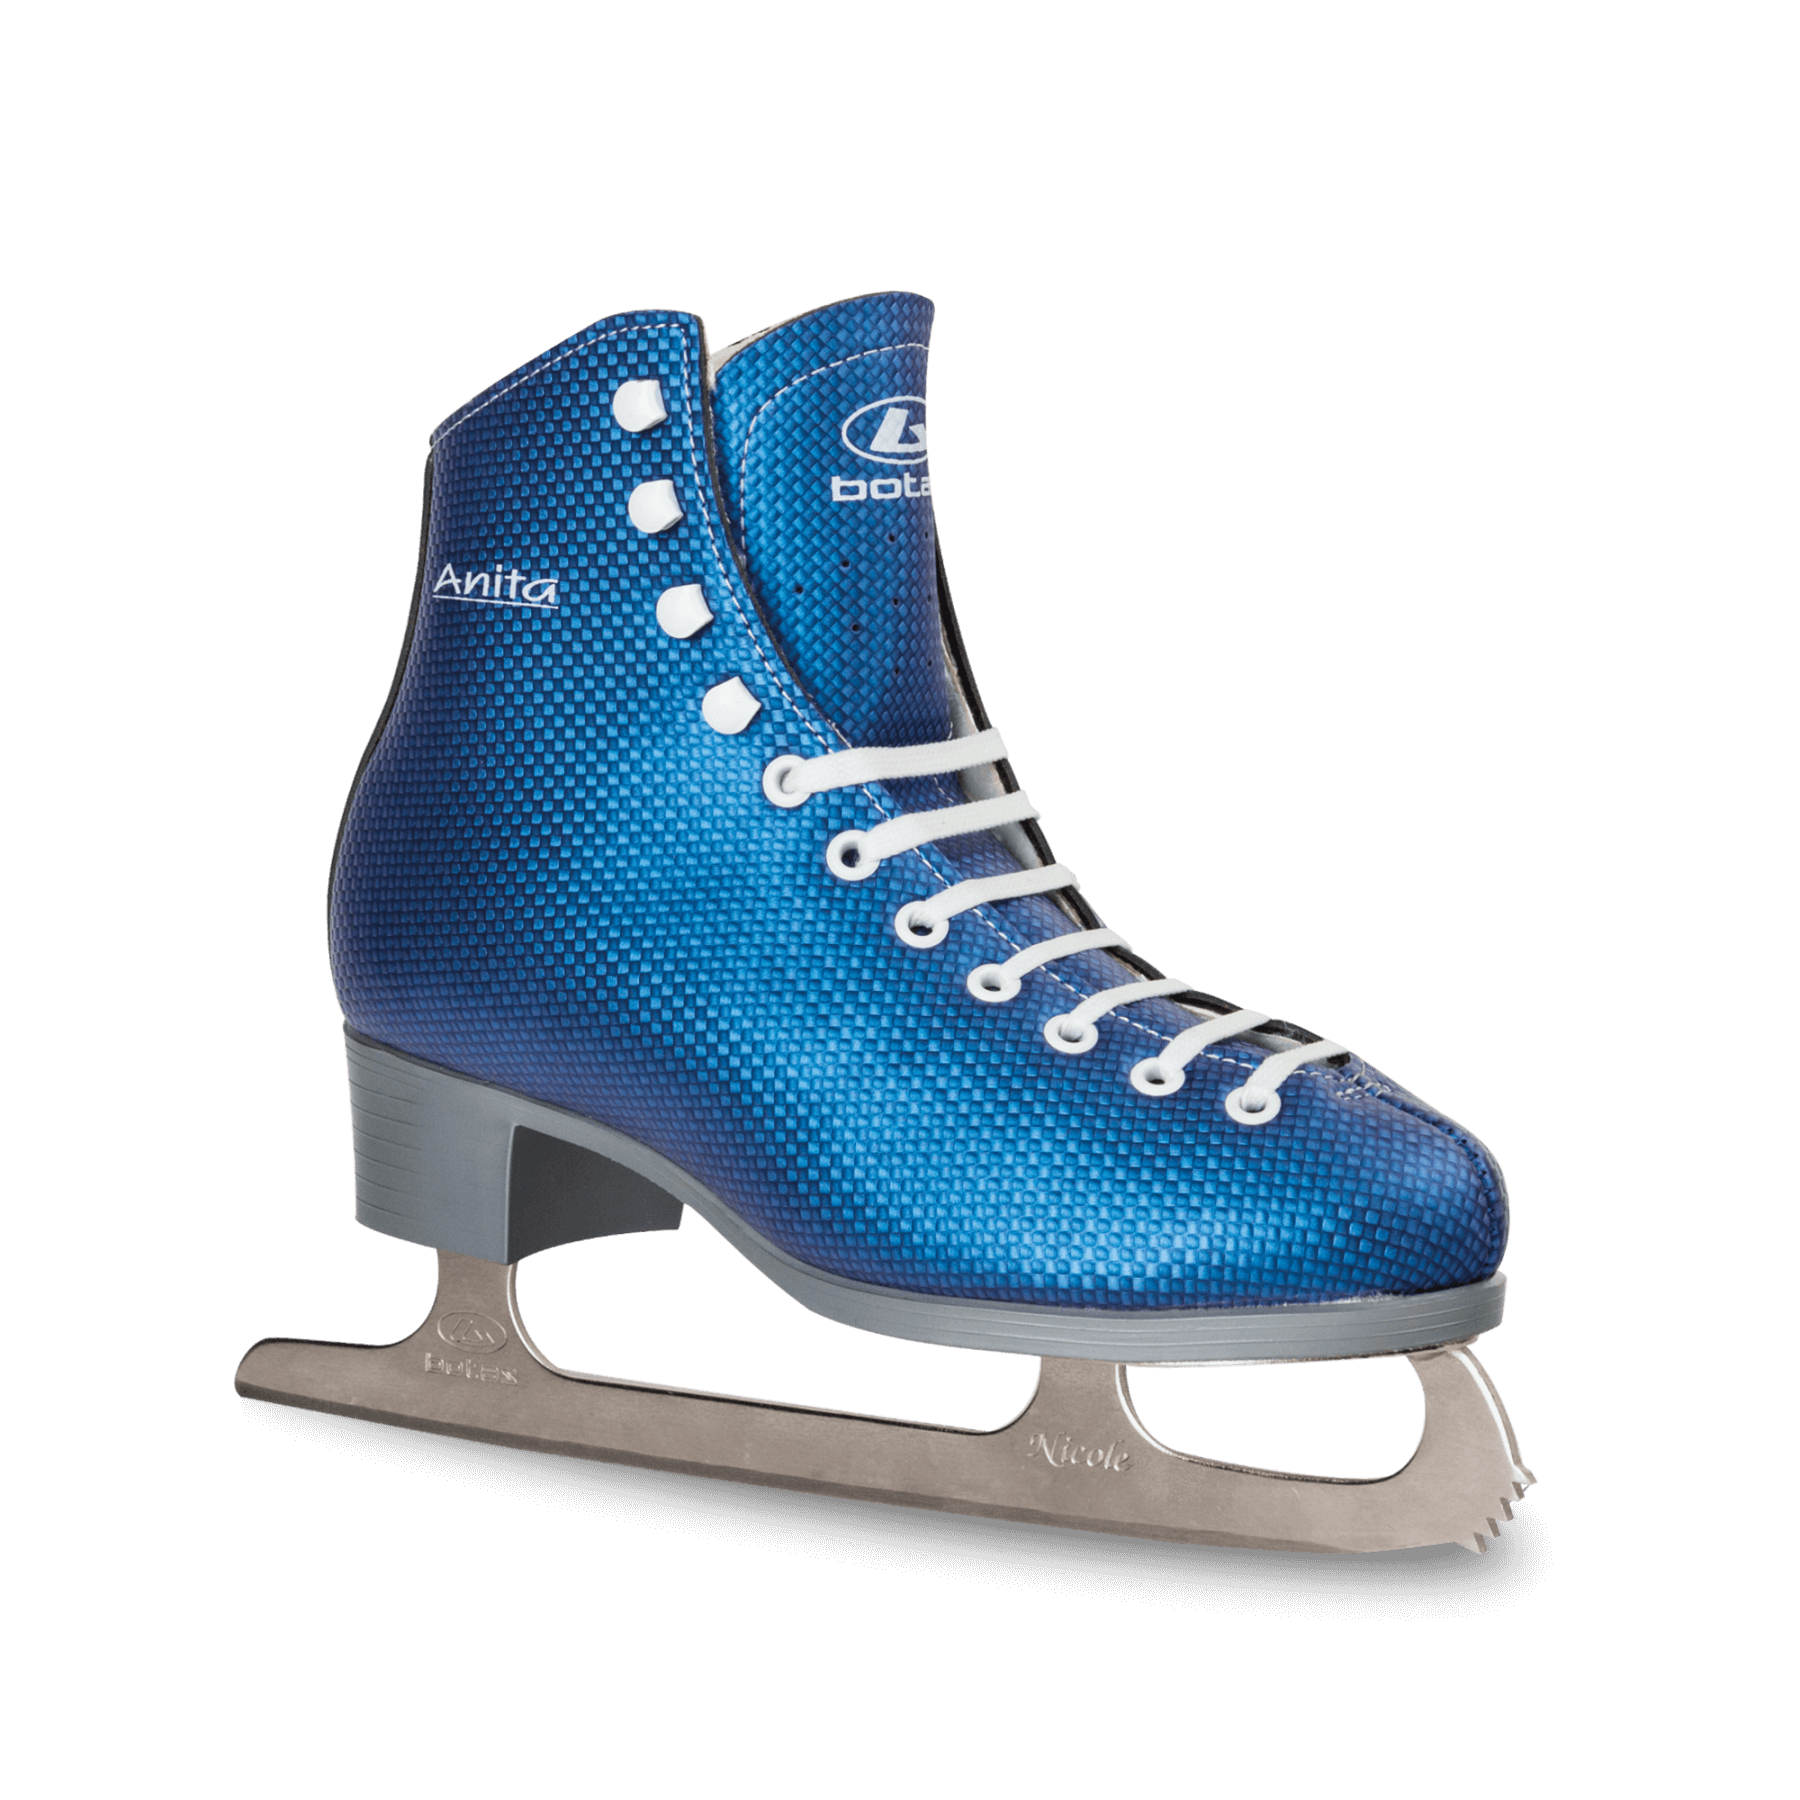 Ice Skating Shoes Transparent Image